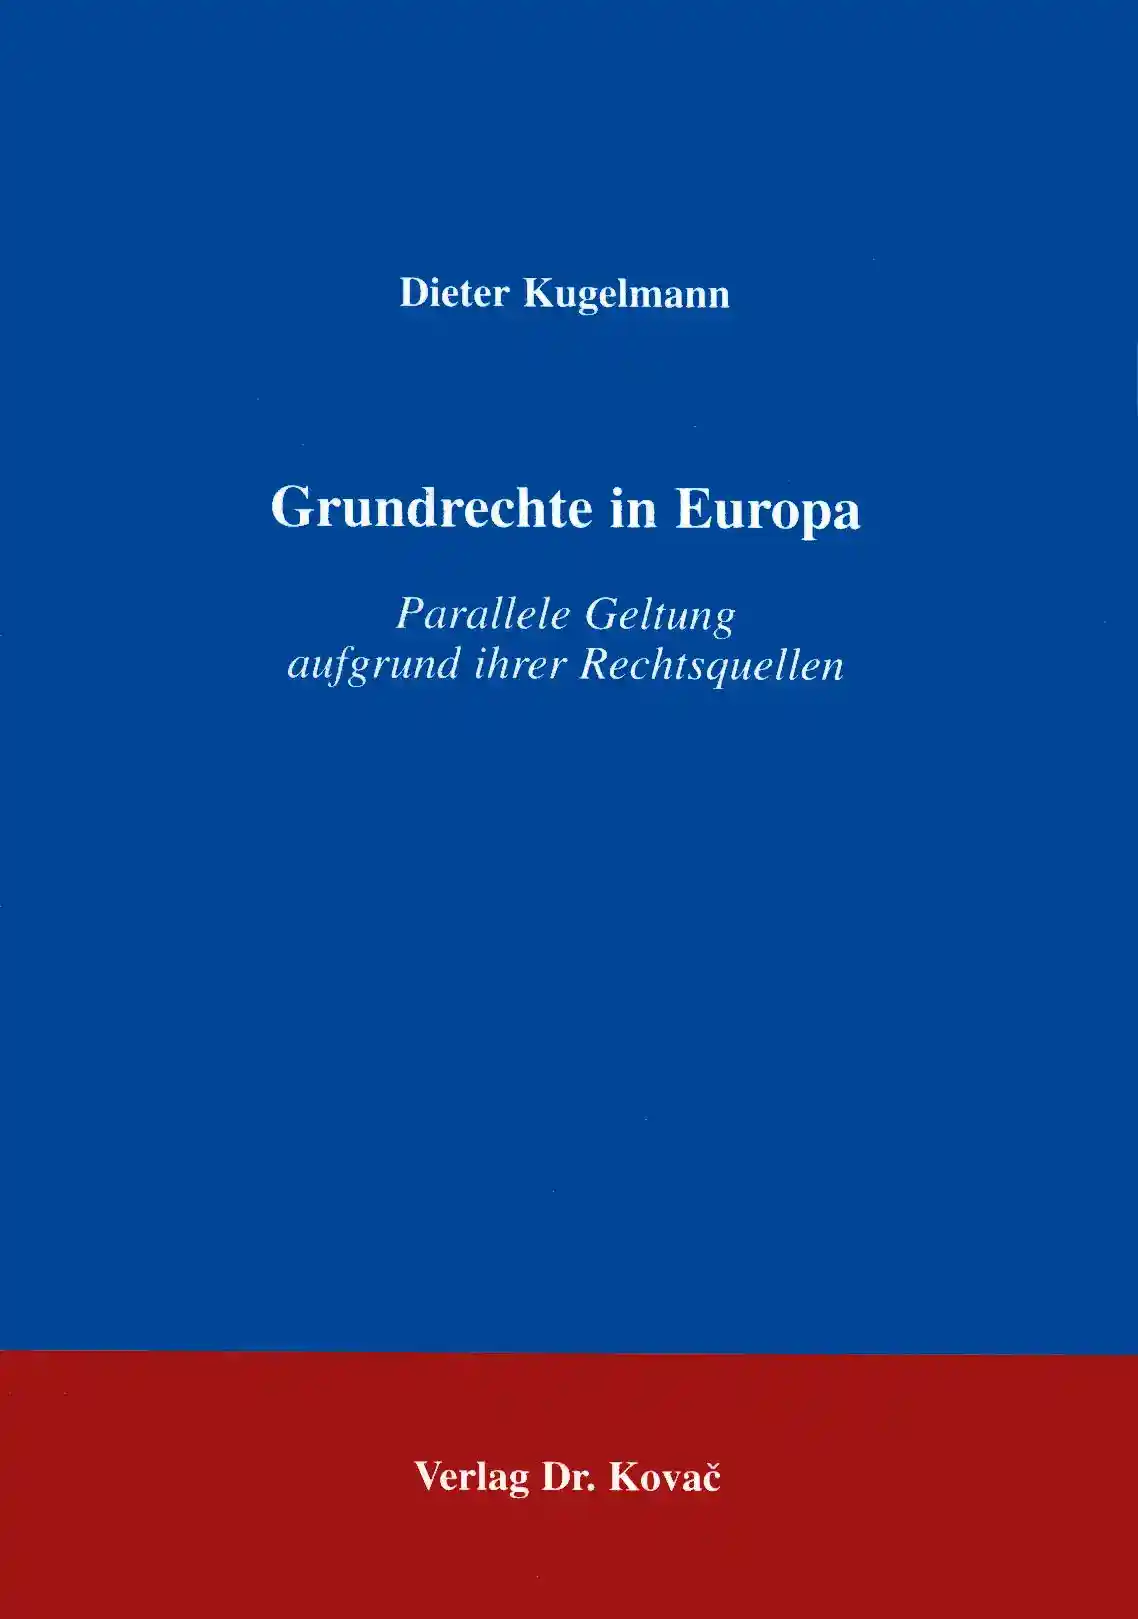 Grundrechte in Europa (Forschungsarbeit)